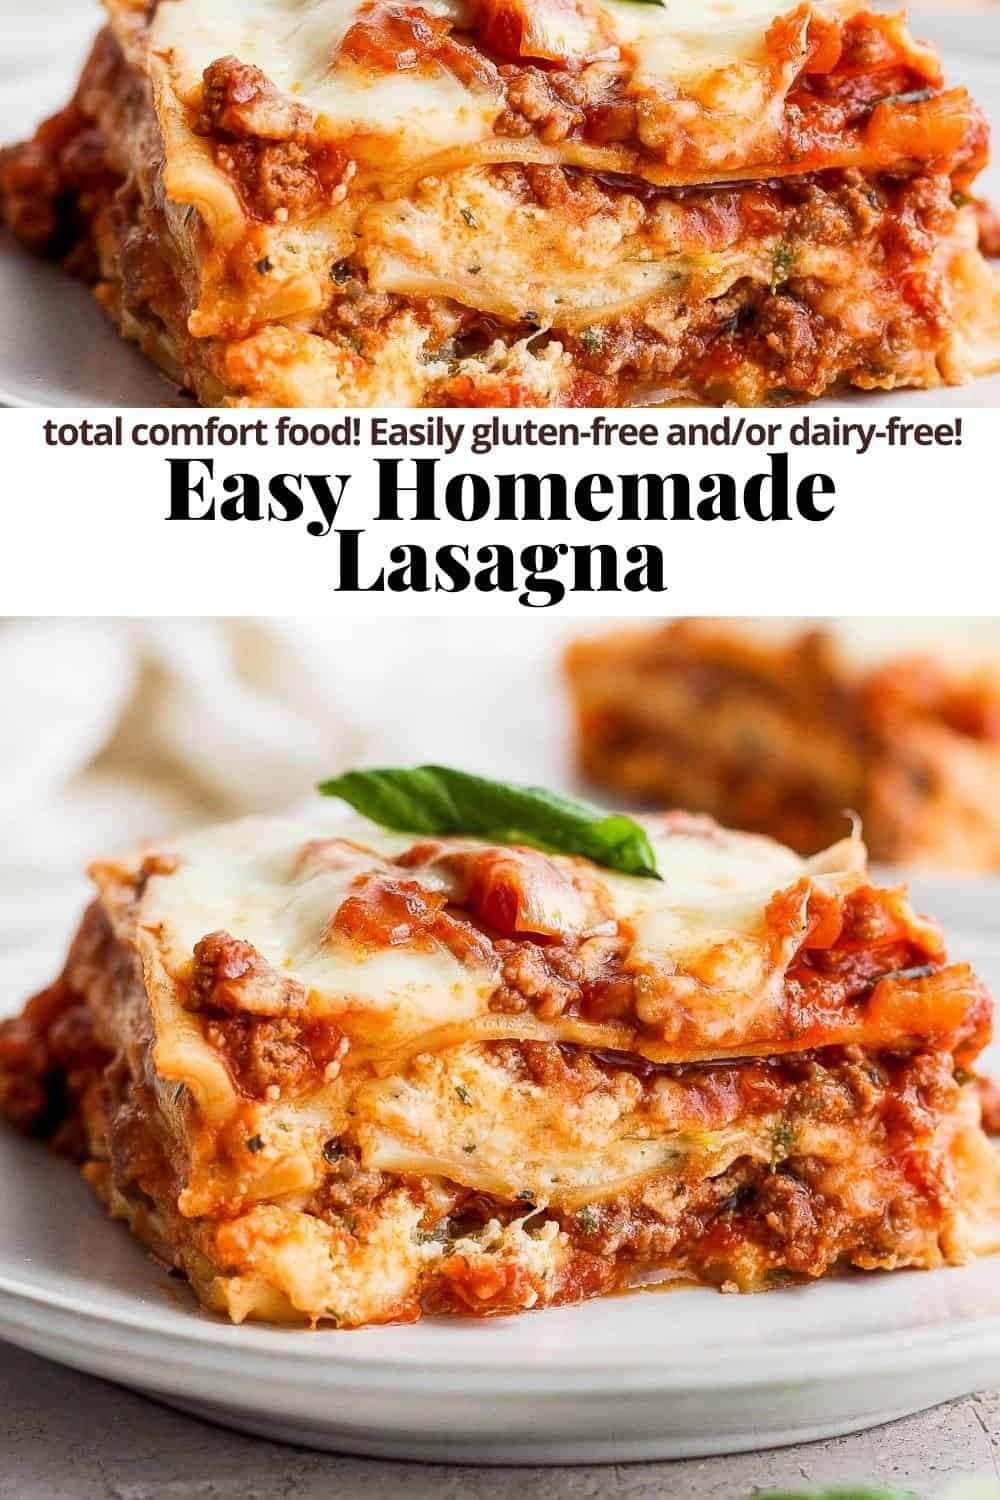 Pinterest image for homemade lasagna.